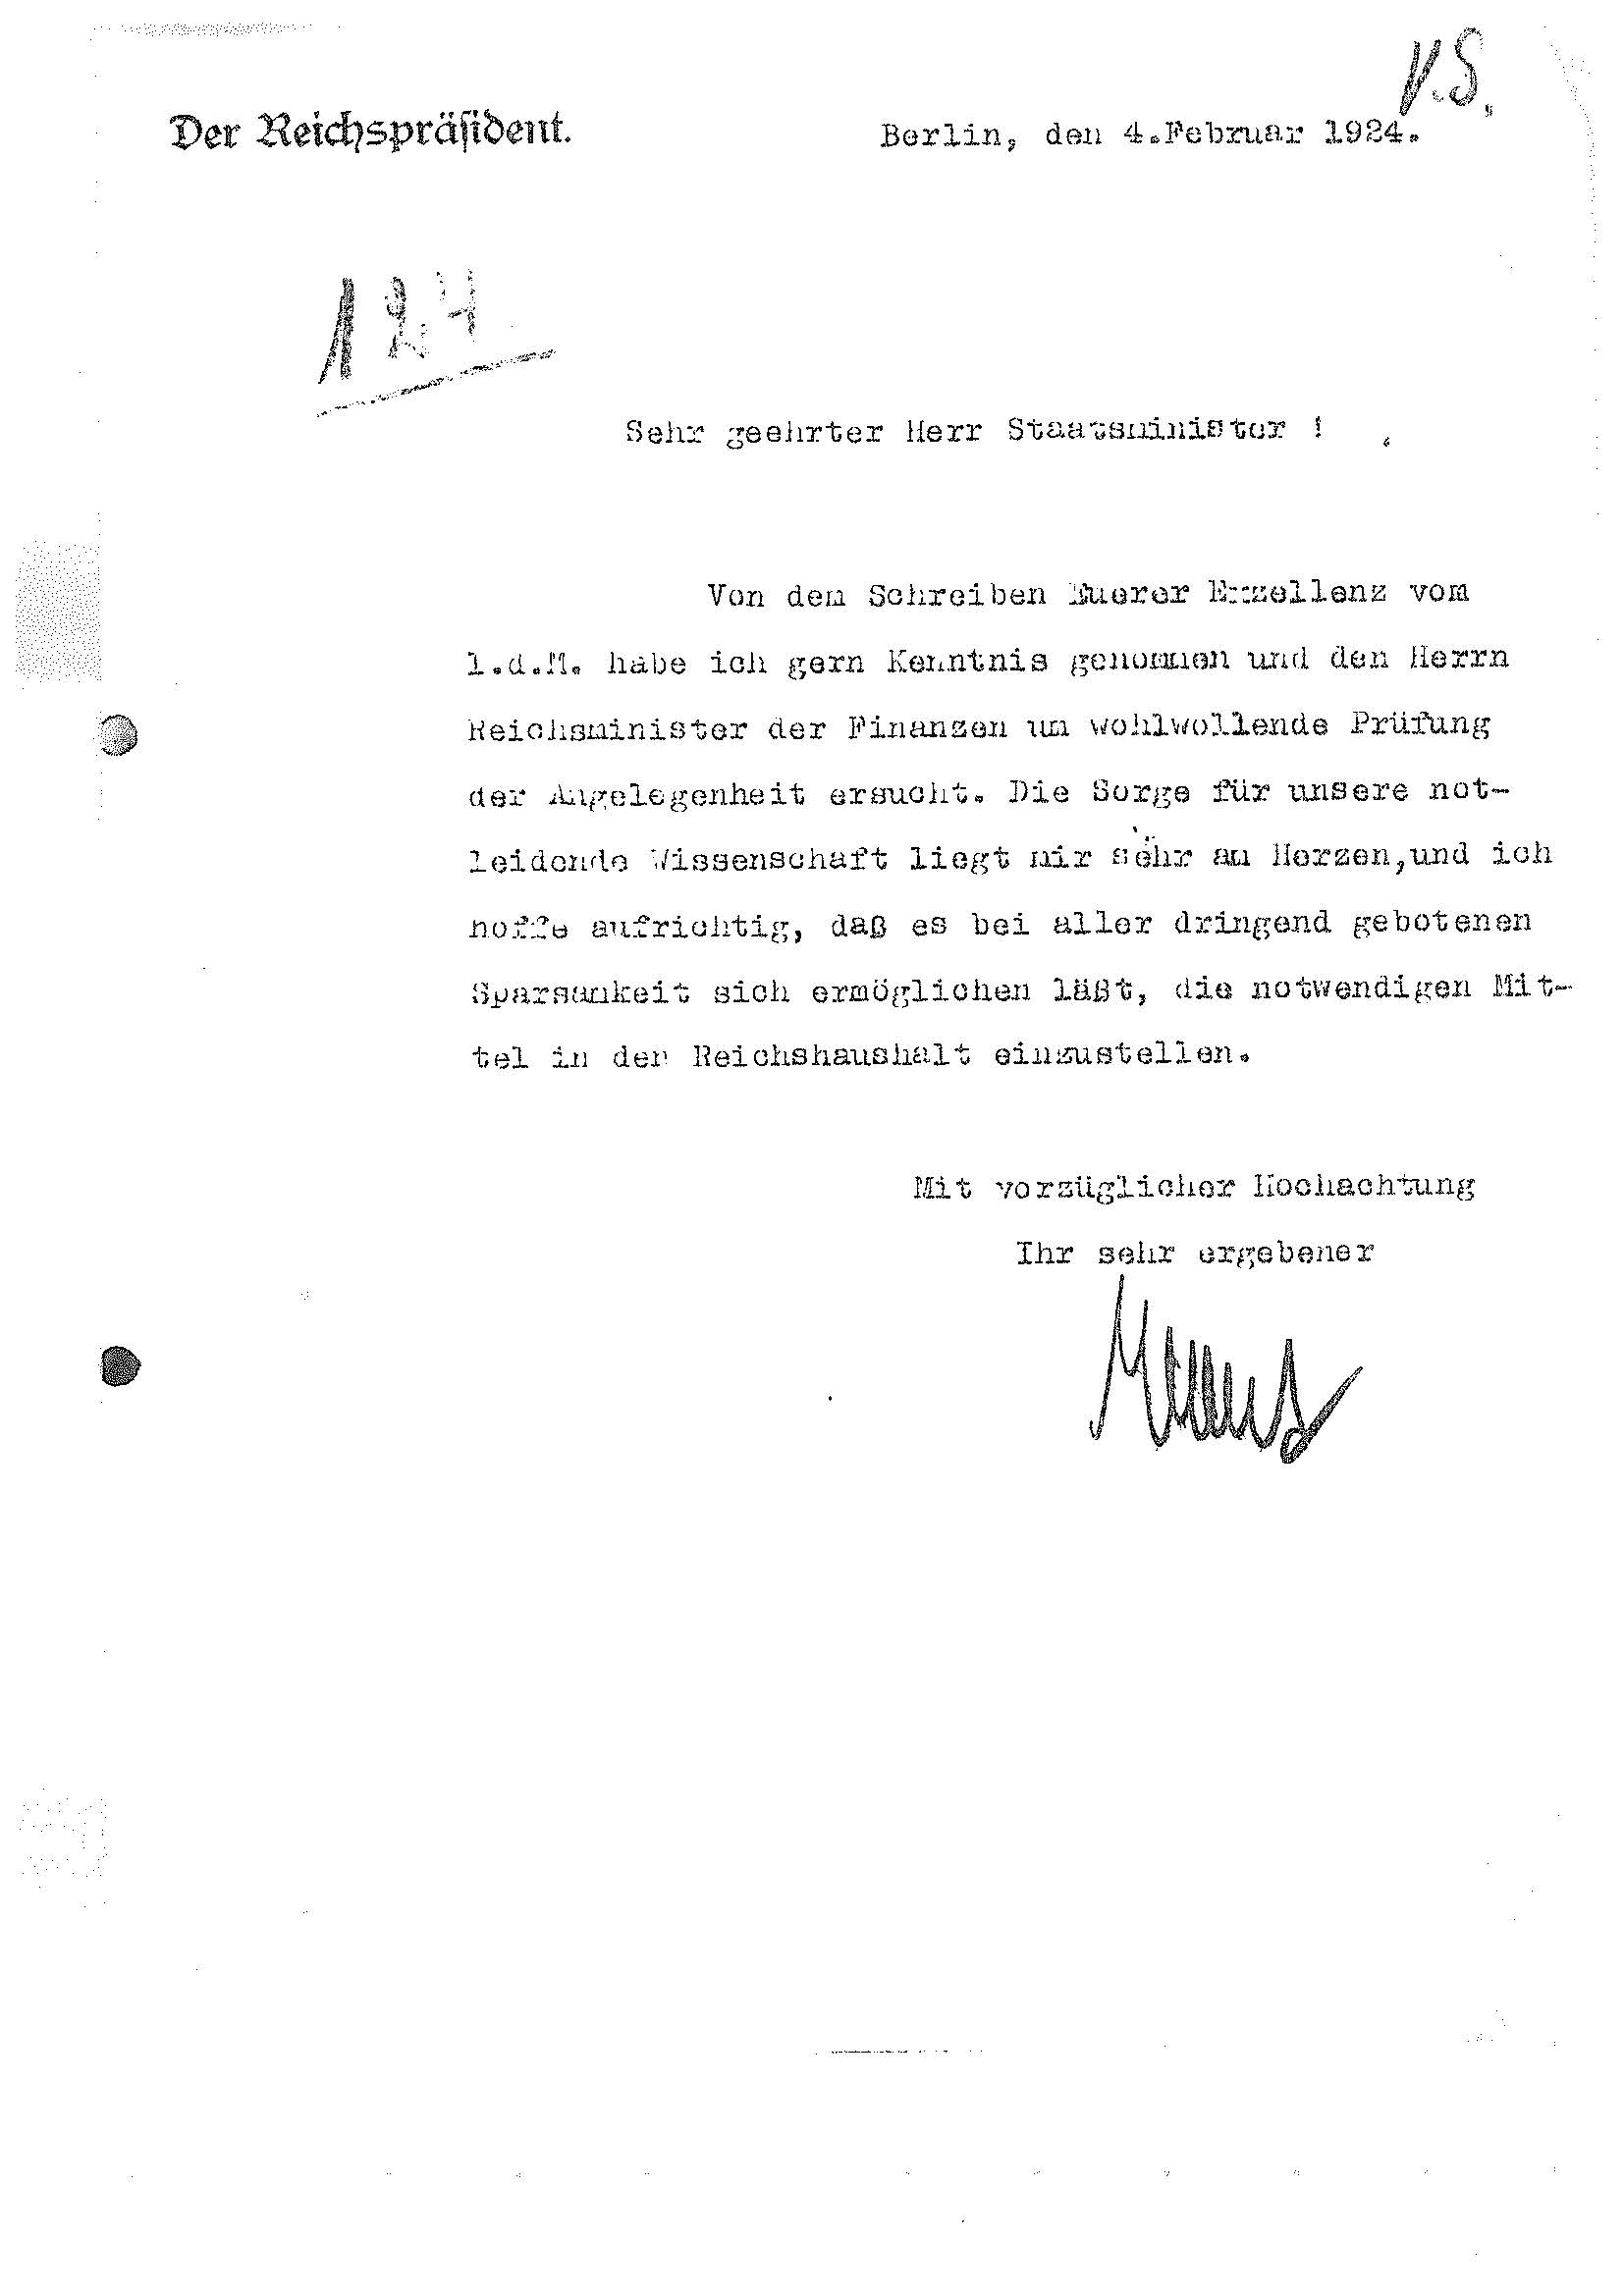 Letter from Reich President Friedrich Ebert to Friedrich Schmidt-Ott, 1924